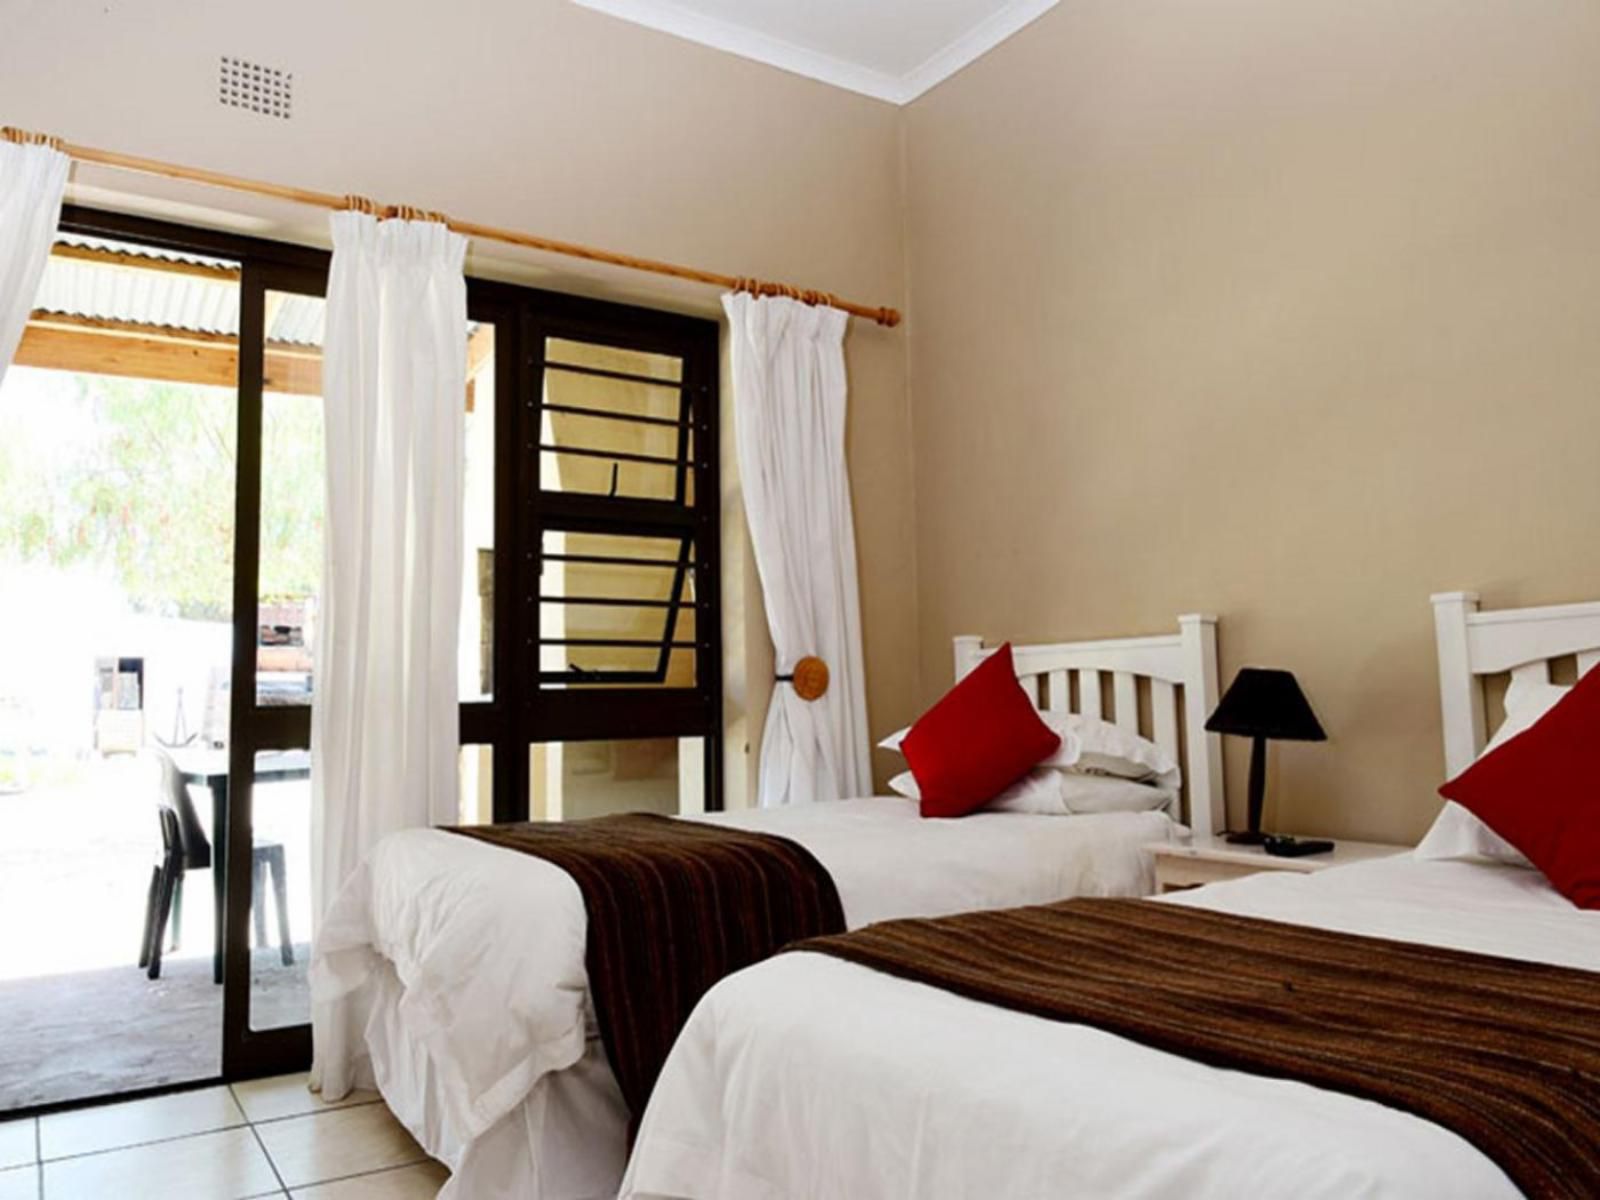 Laaiplek Hotel Velddrif Western Cape South Africa Bedroom